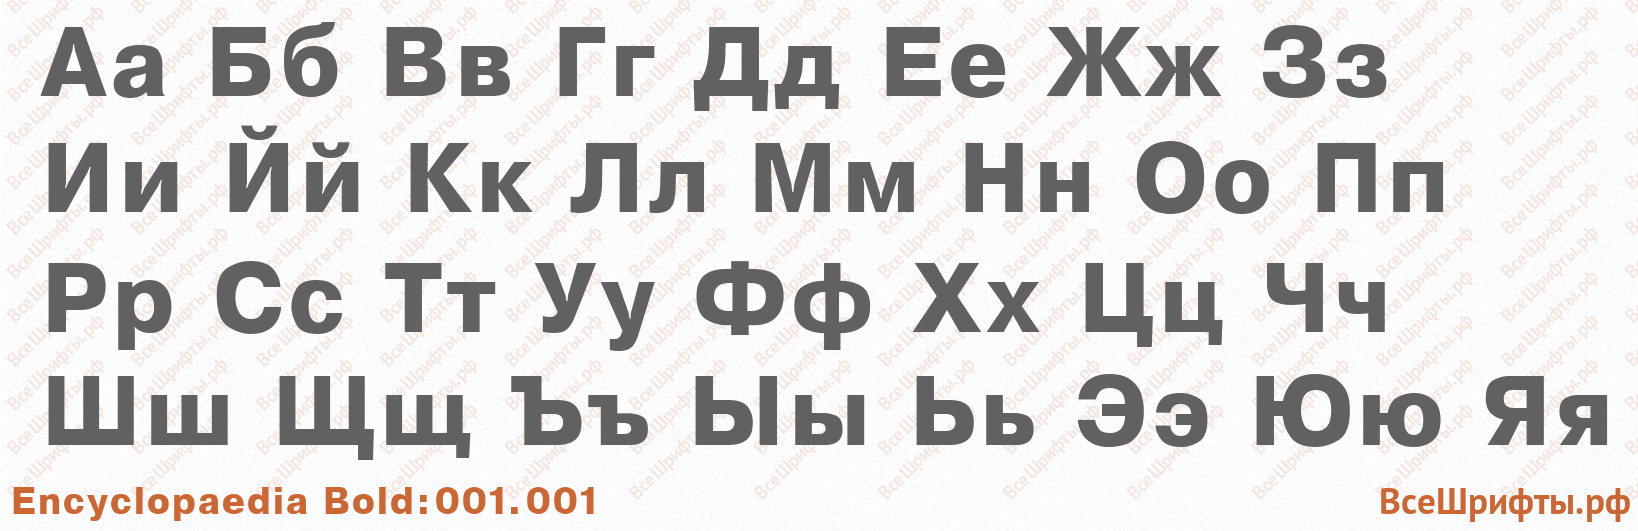 Шрифт Encyclopaedia Bold:001.001 с русскими буквами